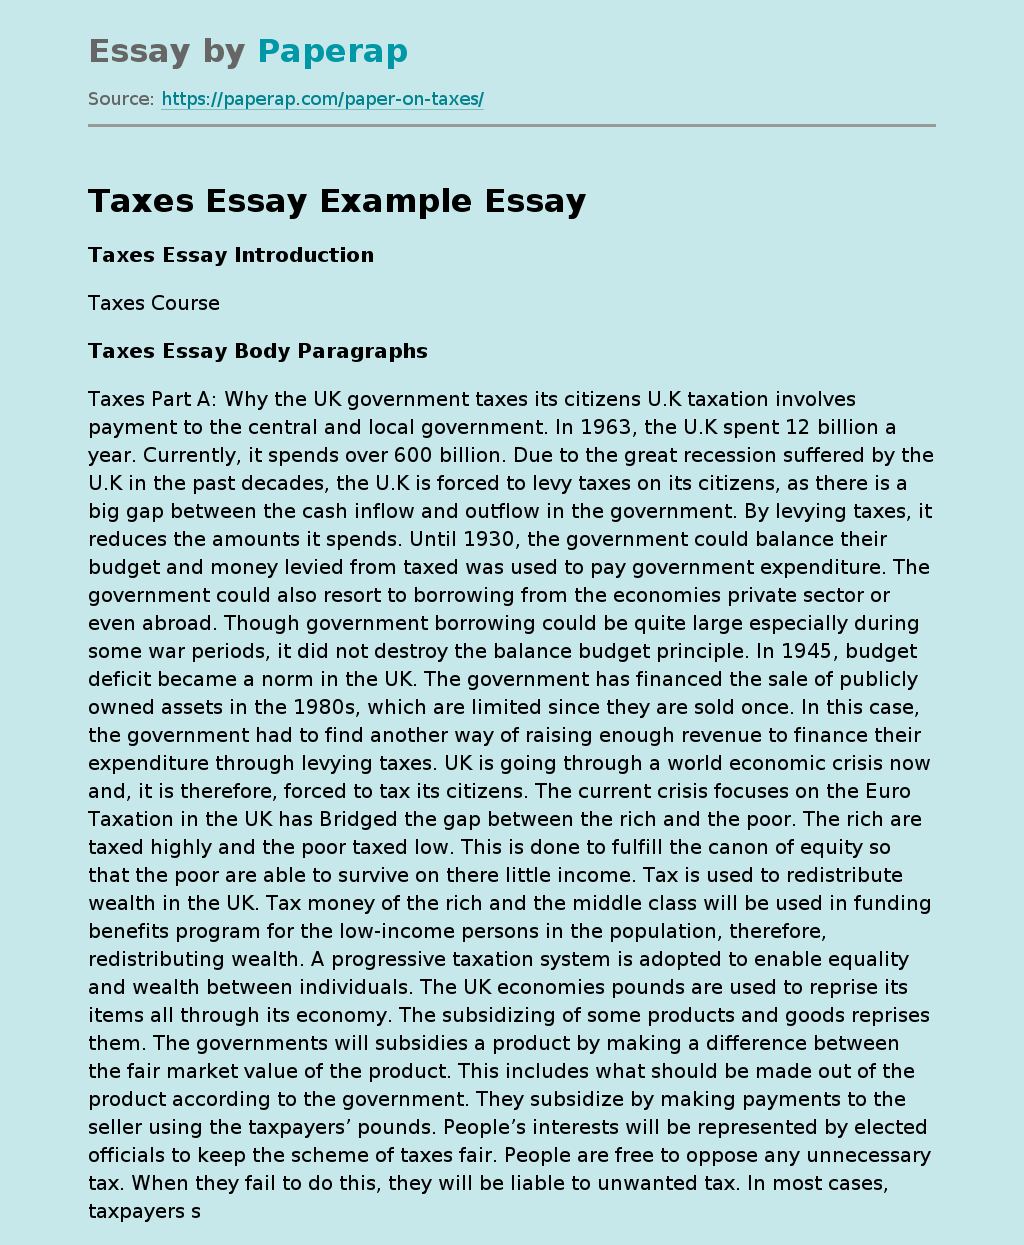 Taxes Essay Body Paragraphs